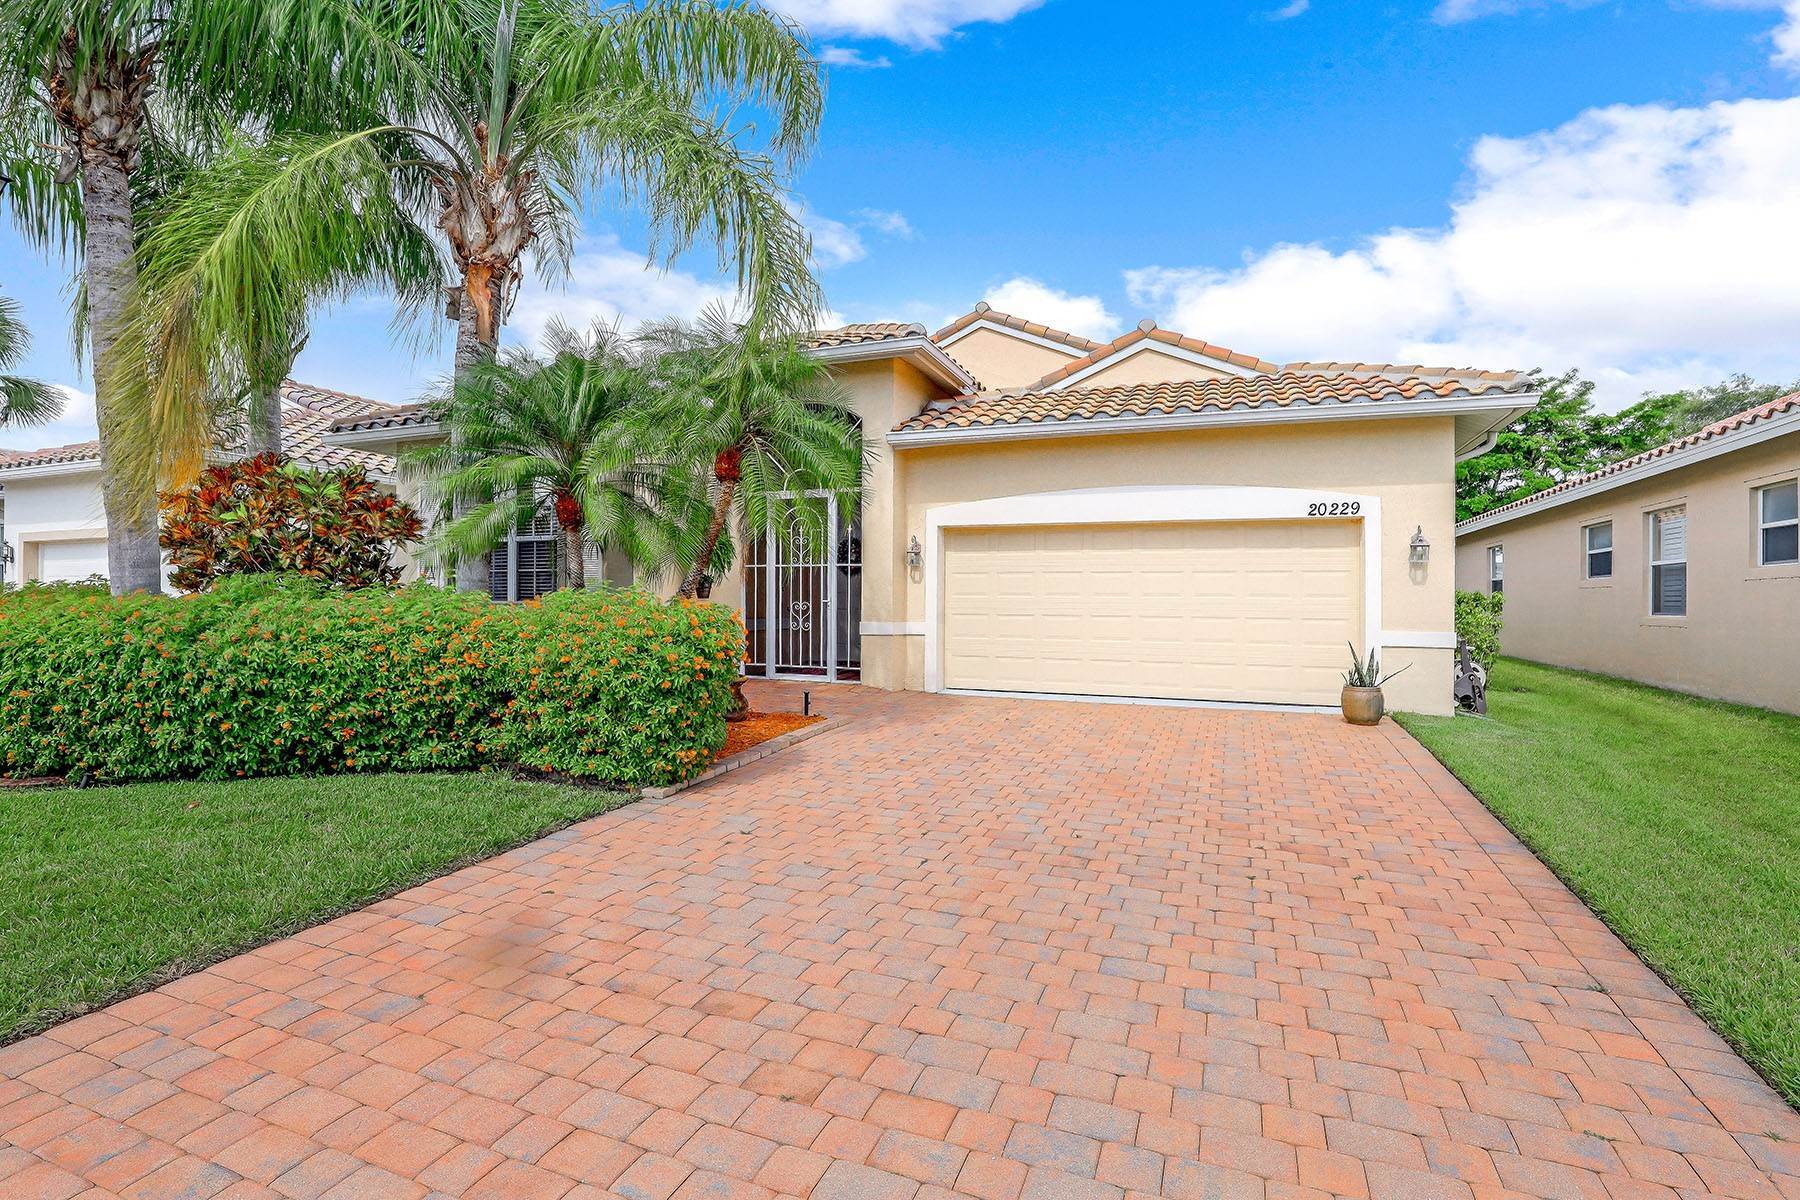 Single Family Homes for Sale at CASCADES AT ESTERO 20229 Castlemaine Avenue Estero, Florida 33928 United States